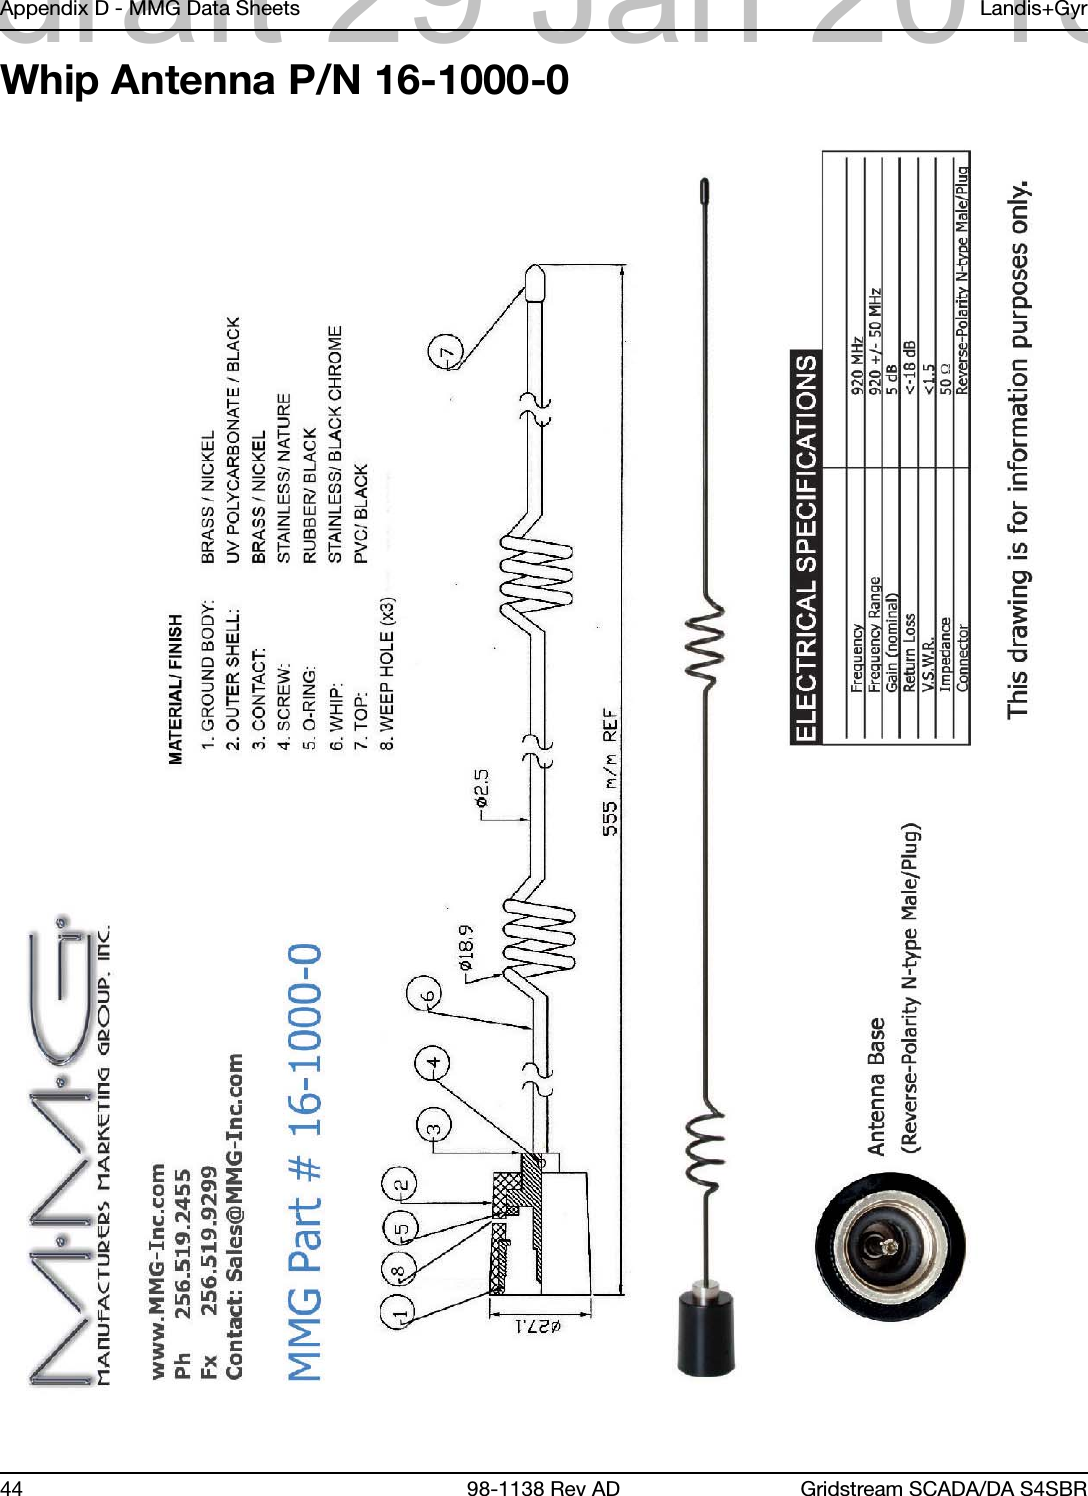 Appendix D - MMG Data Sheets Landis+Gyr44 98-1138 Rev AD Gridstream SCADA/DA S4SBRWhip Antenna P/N 16-1000-0draft 29 Jan 2013